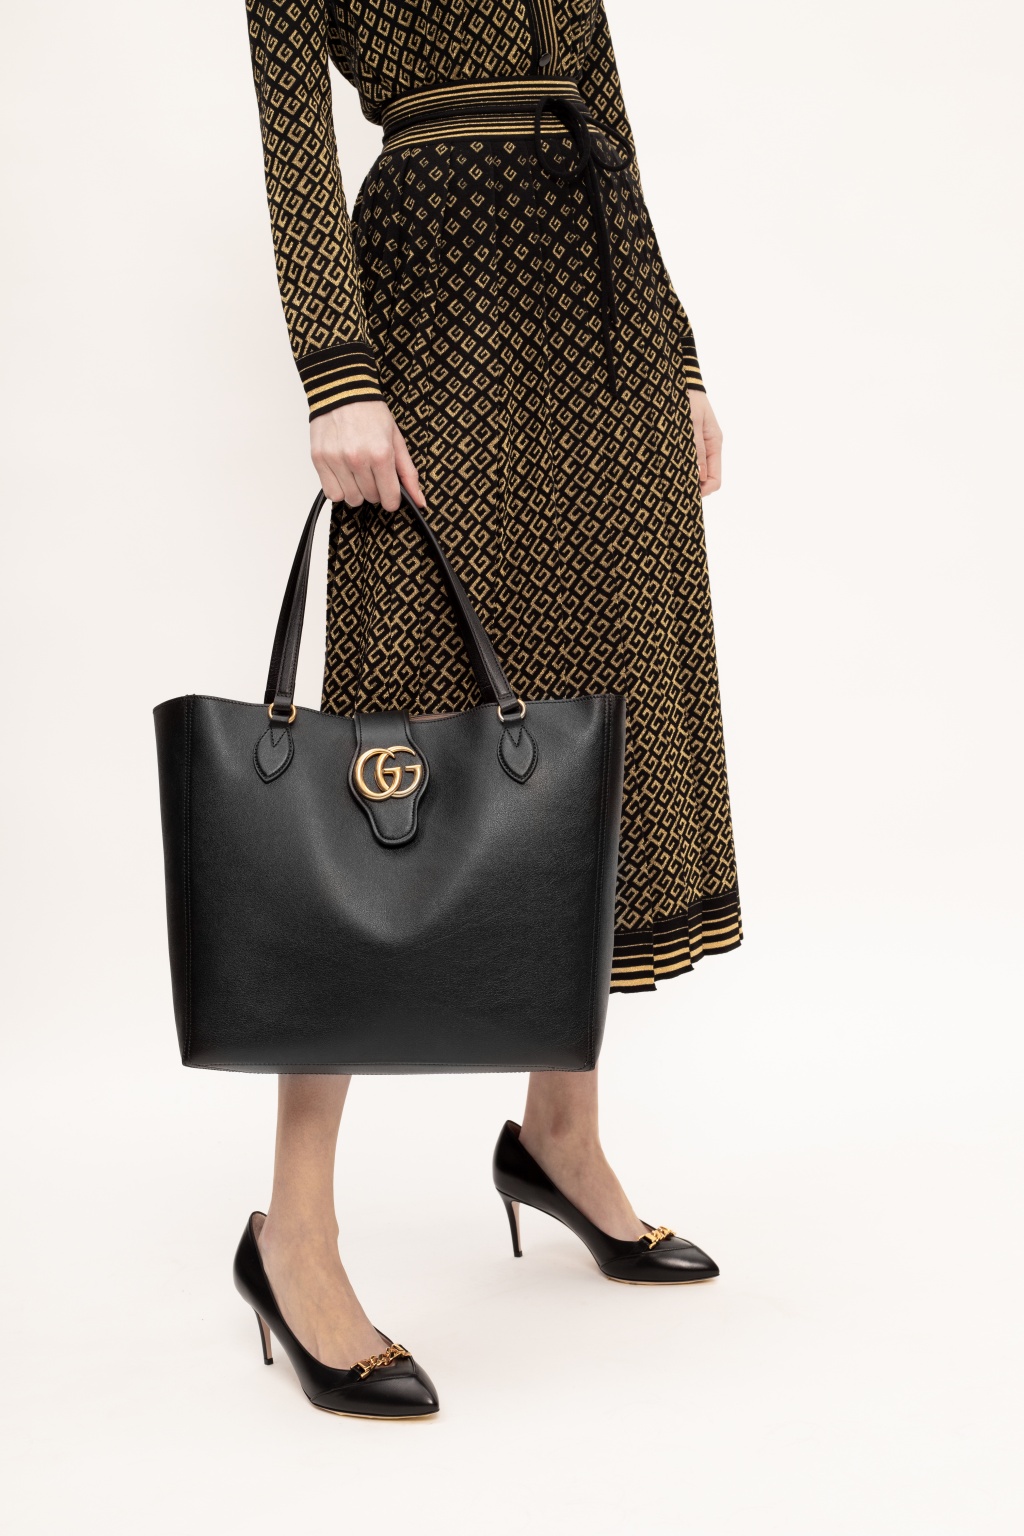 Gucci Leather Dahlia Tote Bag in Black